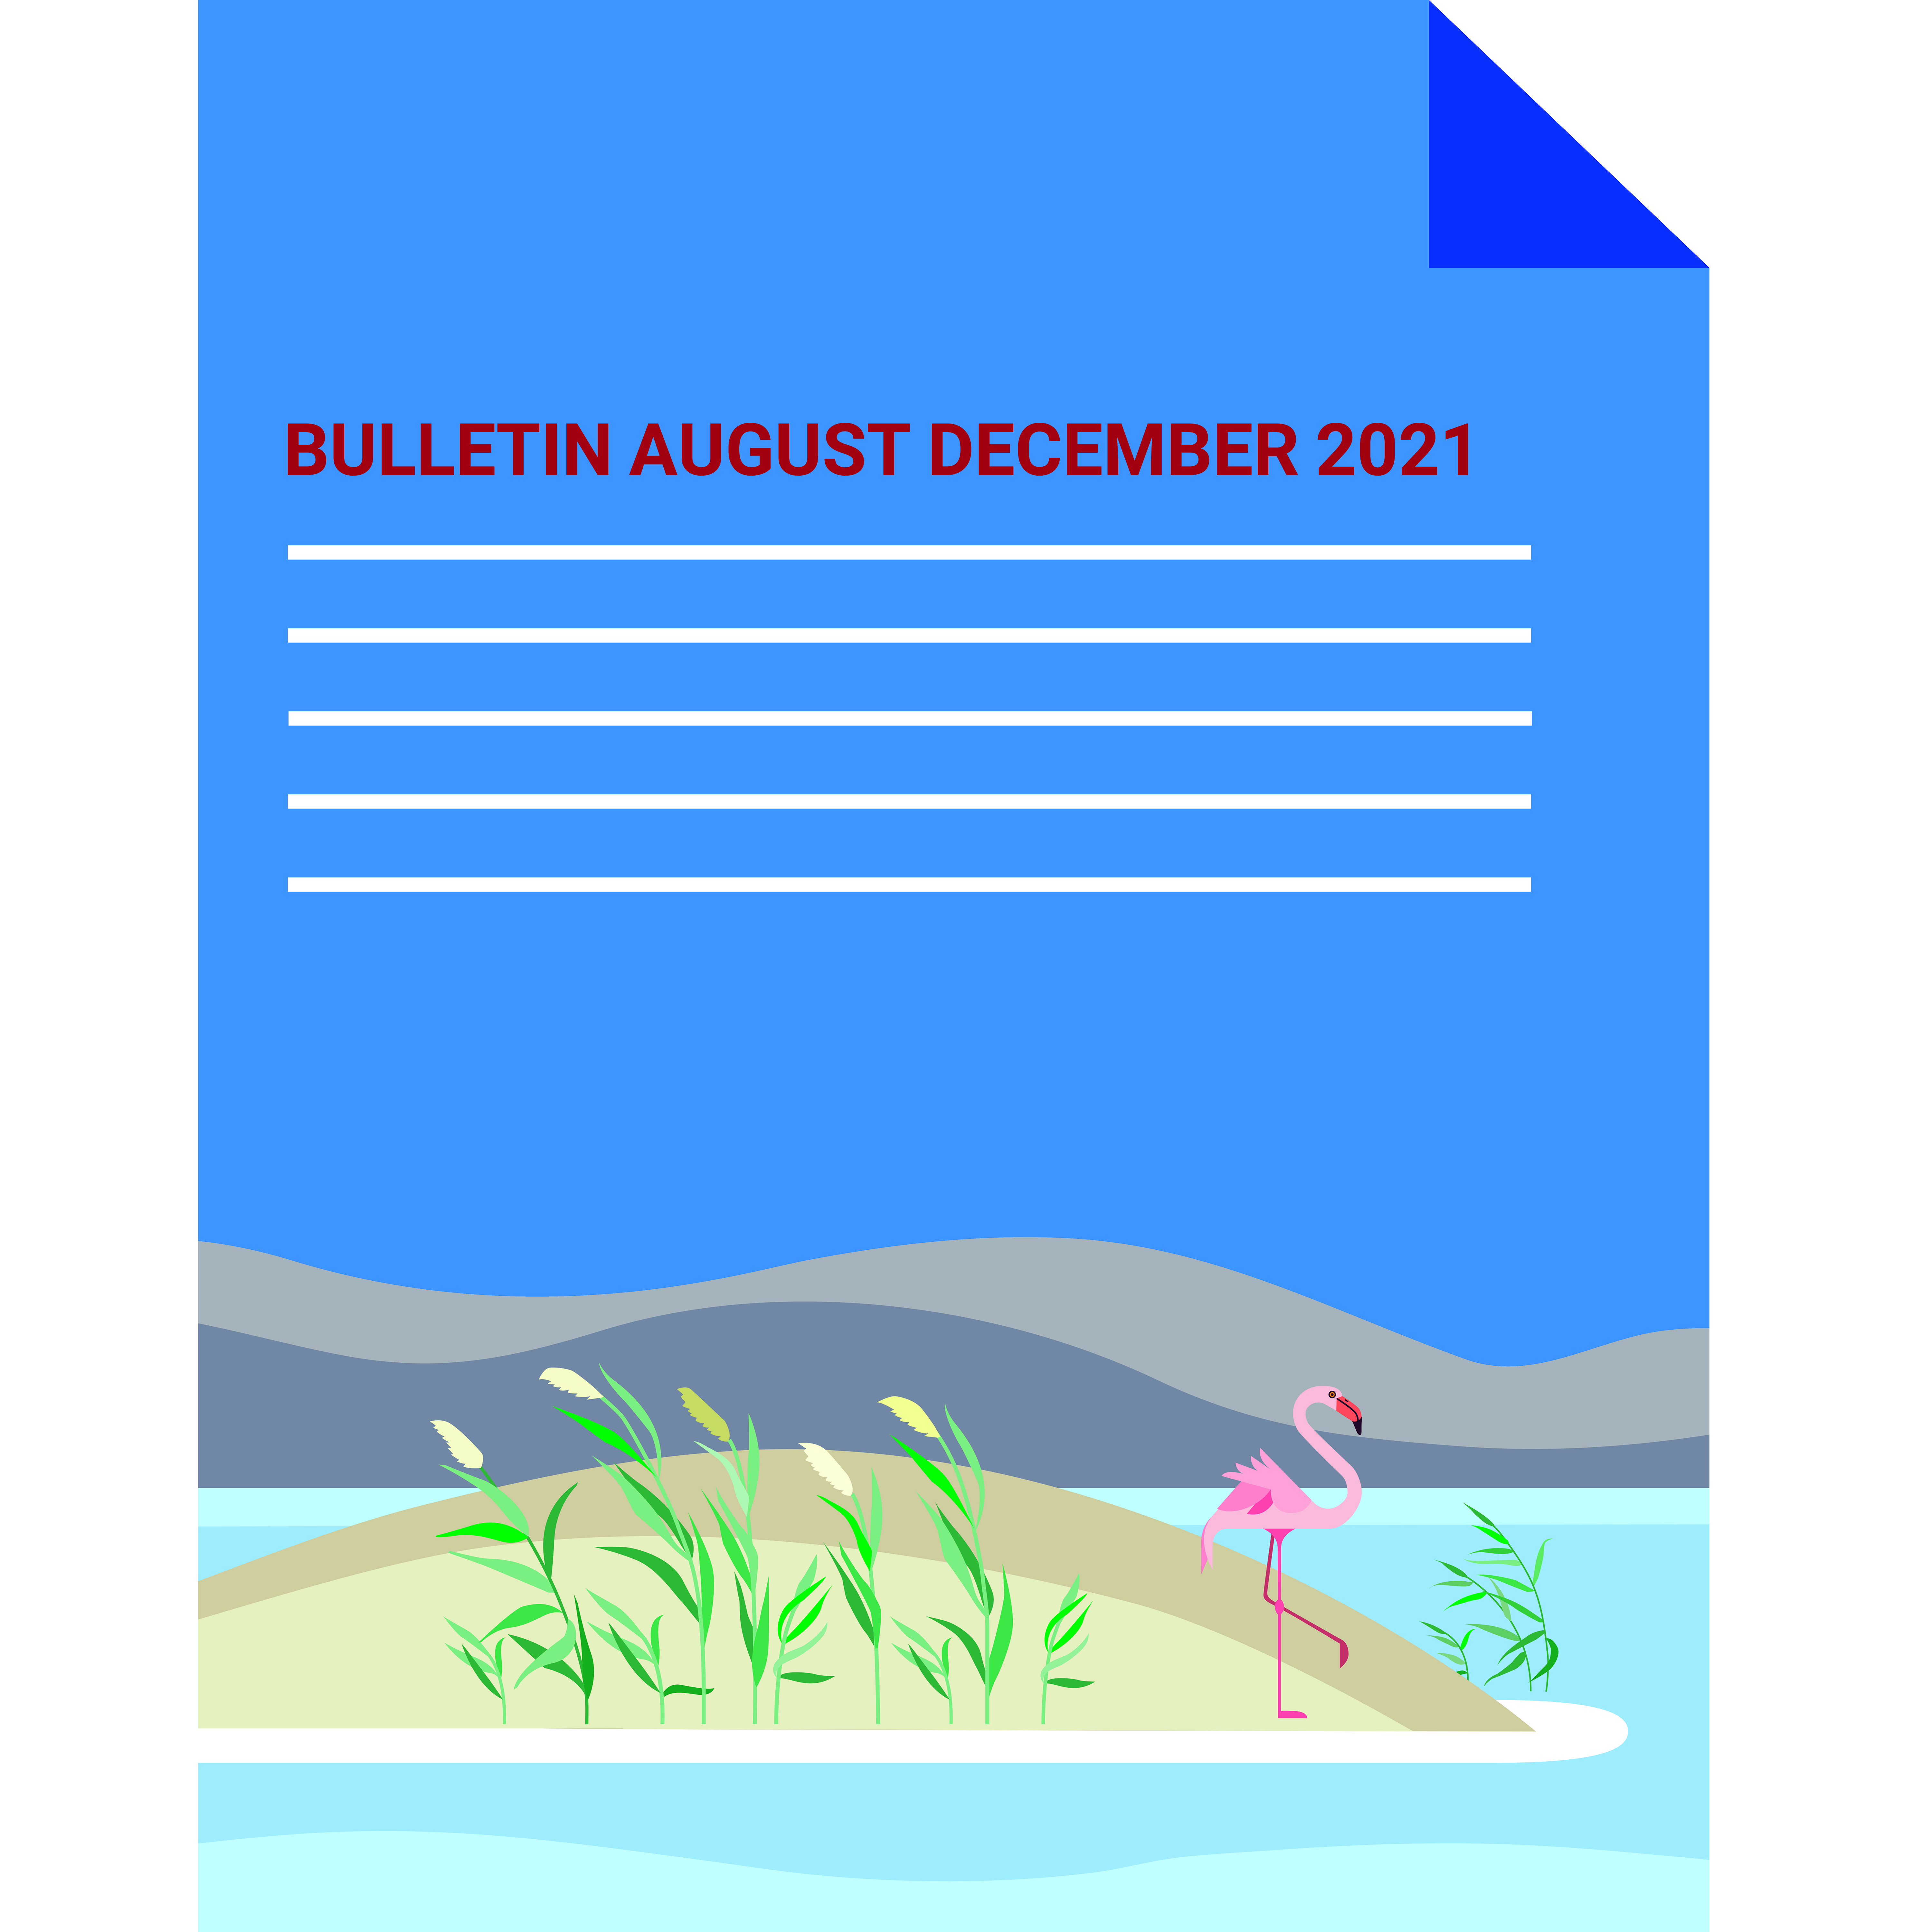 BULLETIN AUGUST DECEMBER 2021